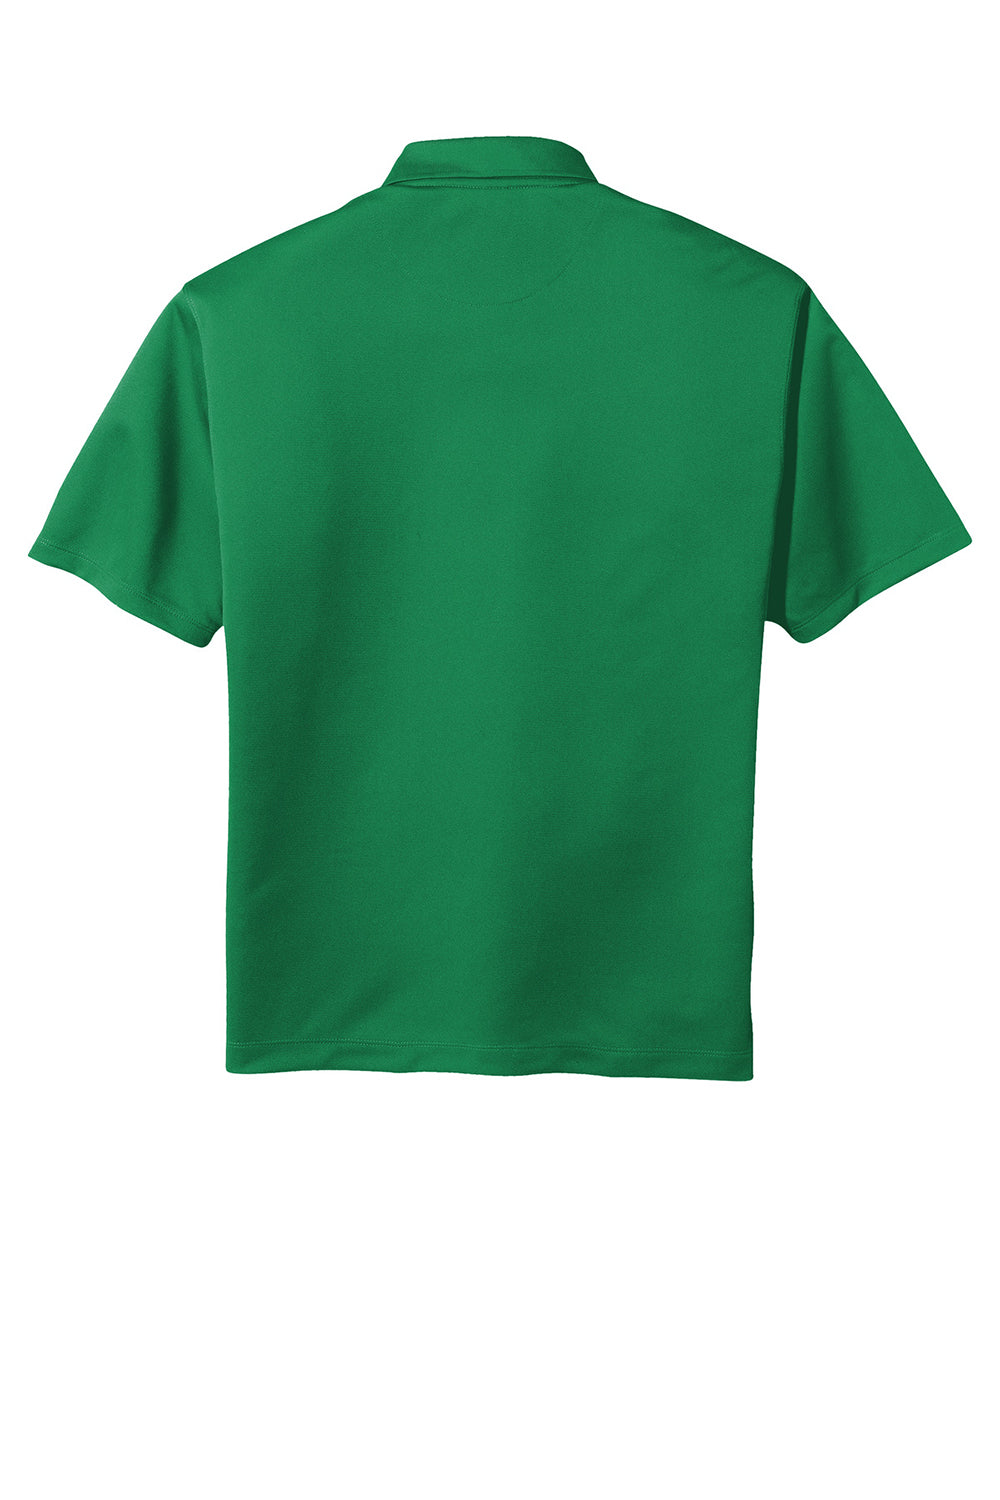 Nike 203690 Mens Tech Basic Dri-Fit Moisture Wicking Short Sleeve Polo Shirt Lucky Green Flat Back